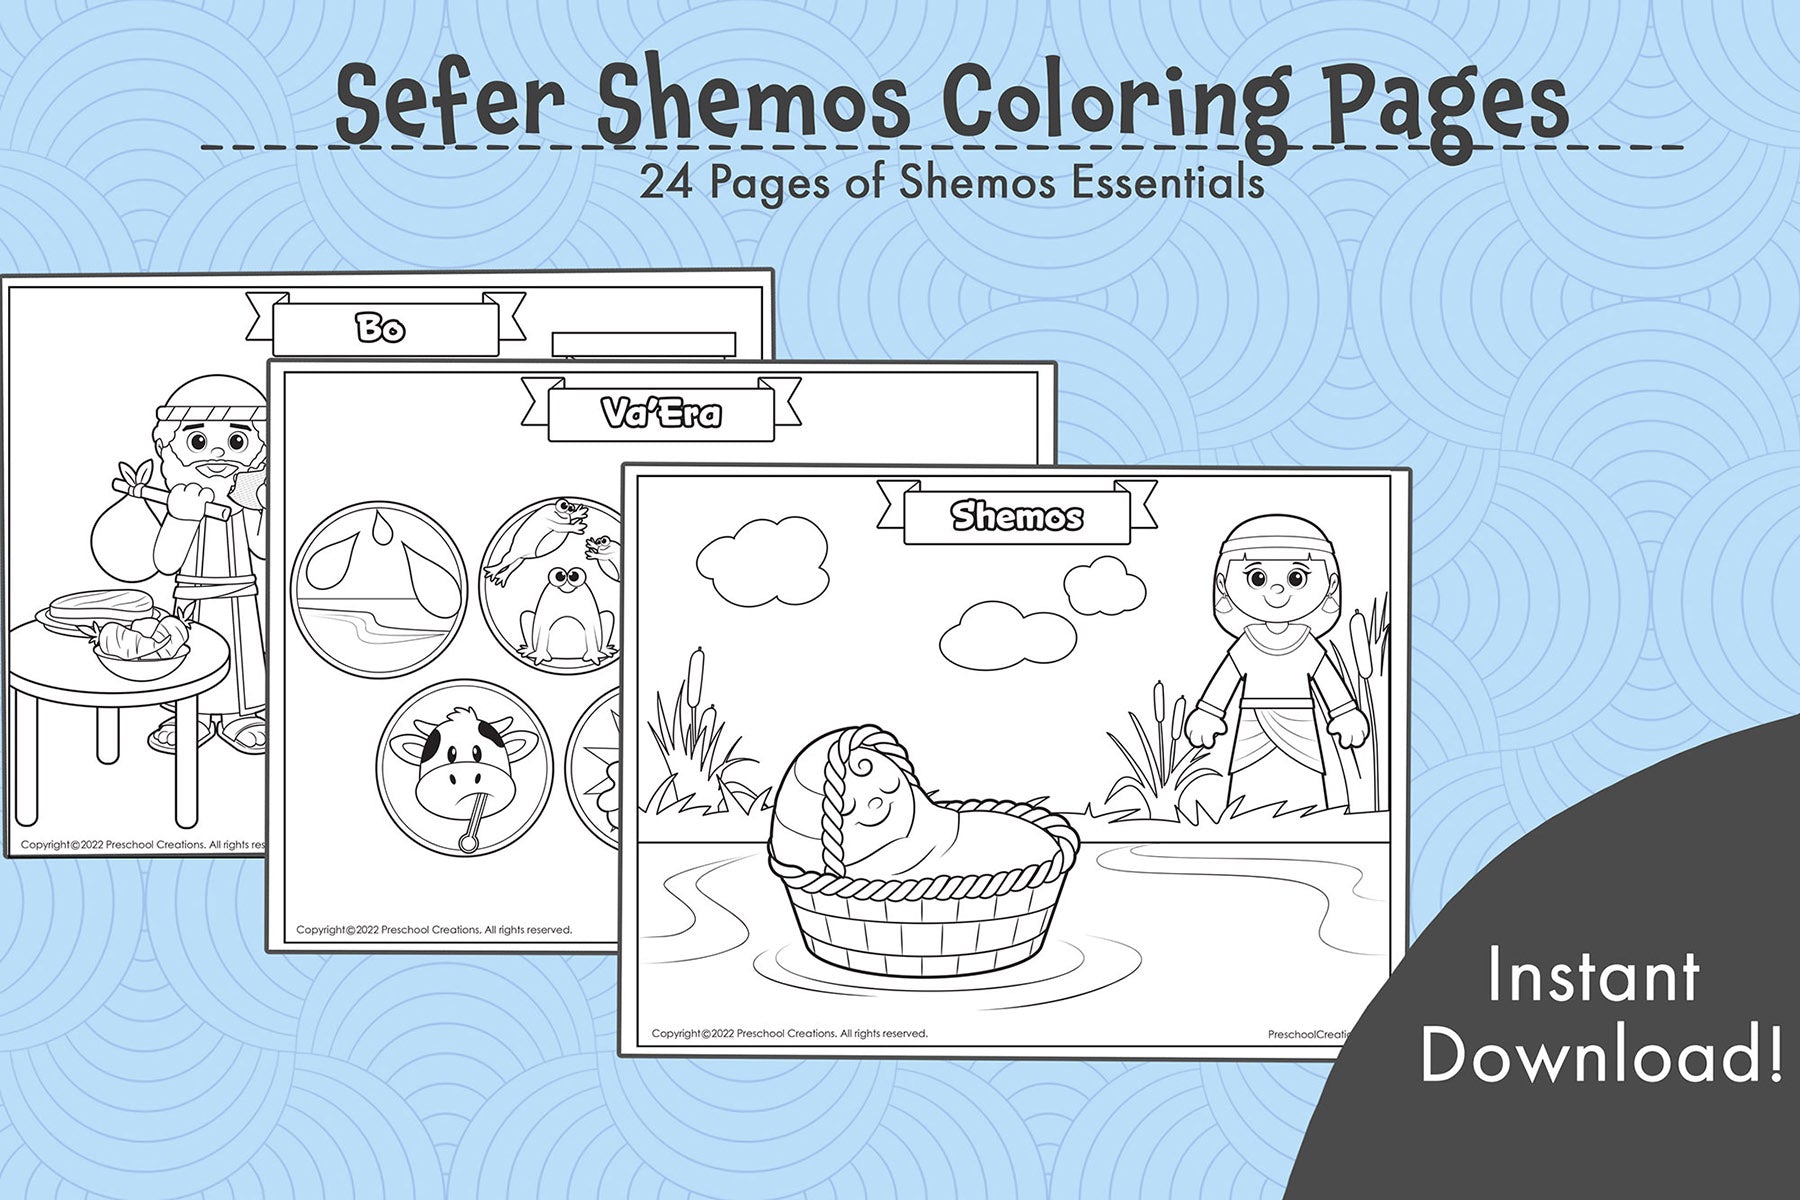 Sefer Shemos Parsha Drawing Journal – Preschool Creations